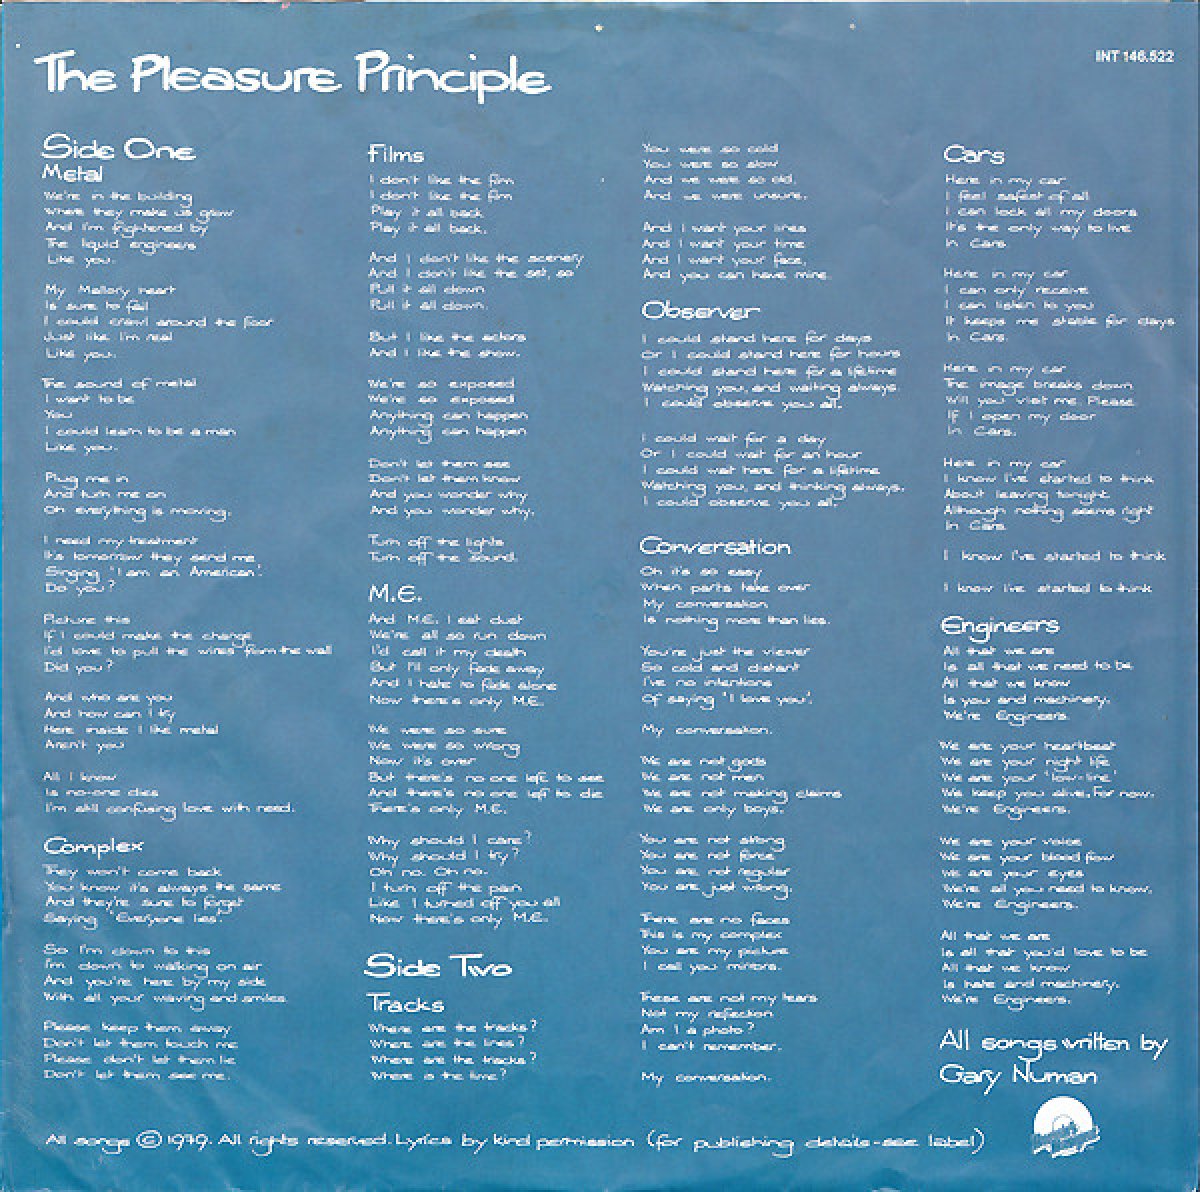 Gary Numan "The Pleasure Principle"